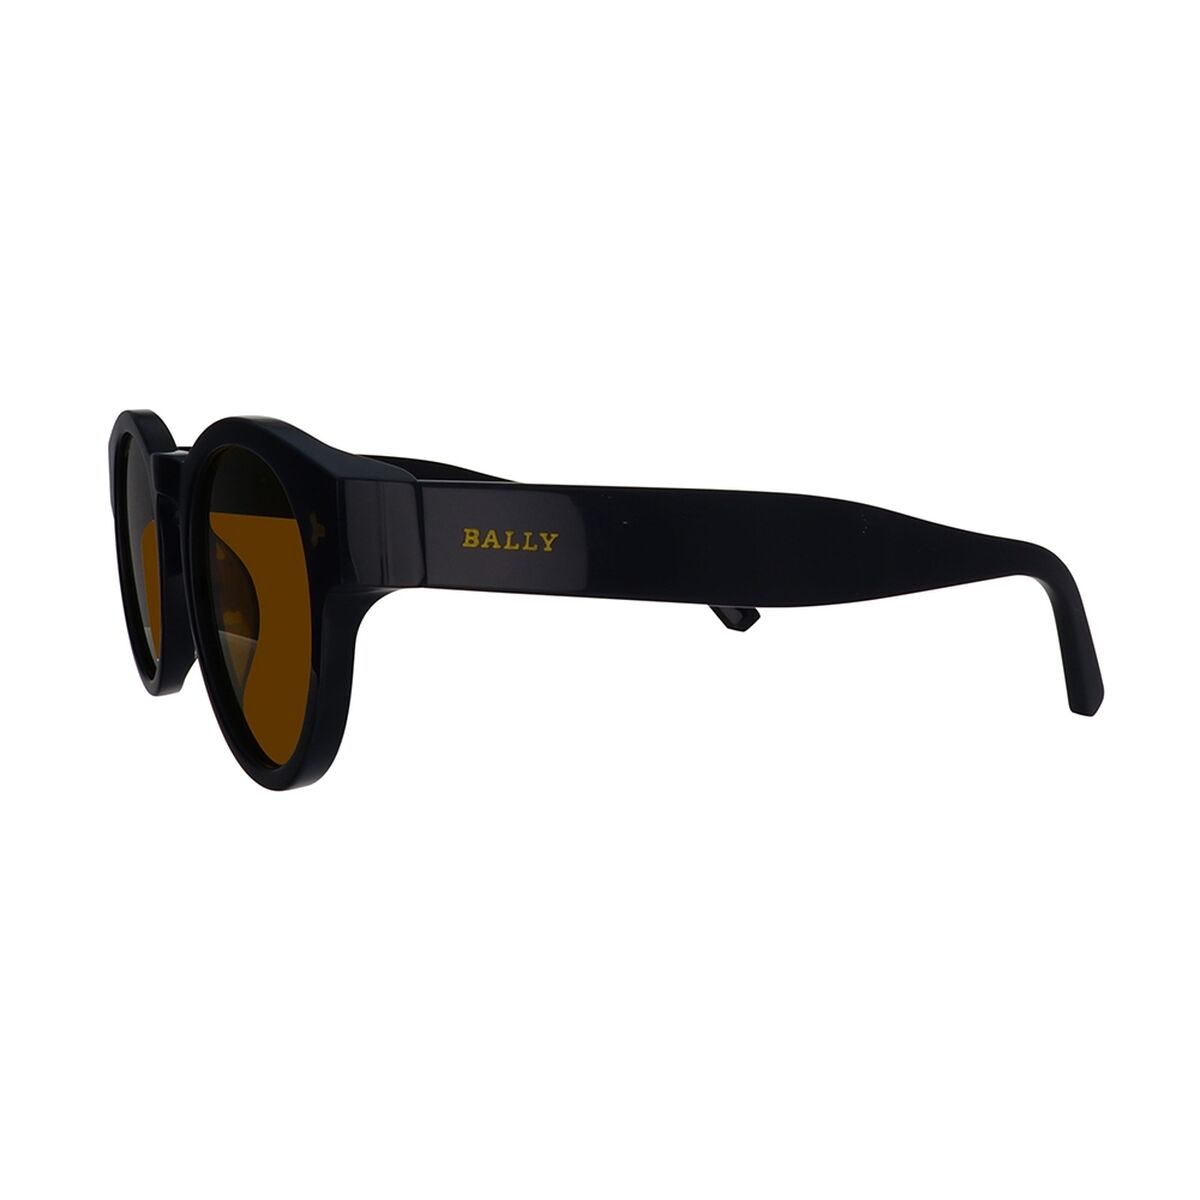 Kaufe Herrensonnenbrille Bally BY0032_H-90E-50 bei AWK Flagship um € 124.00